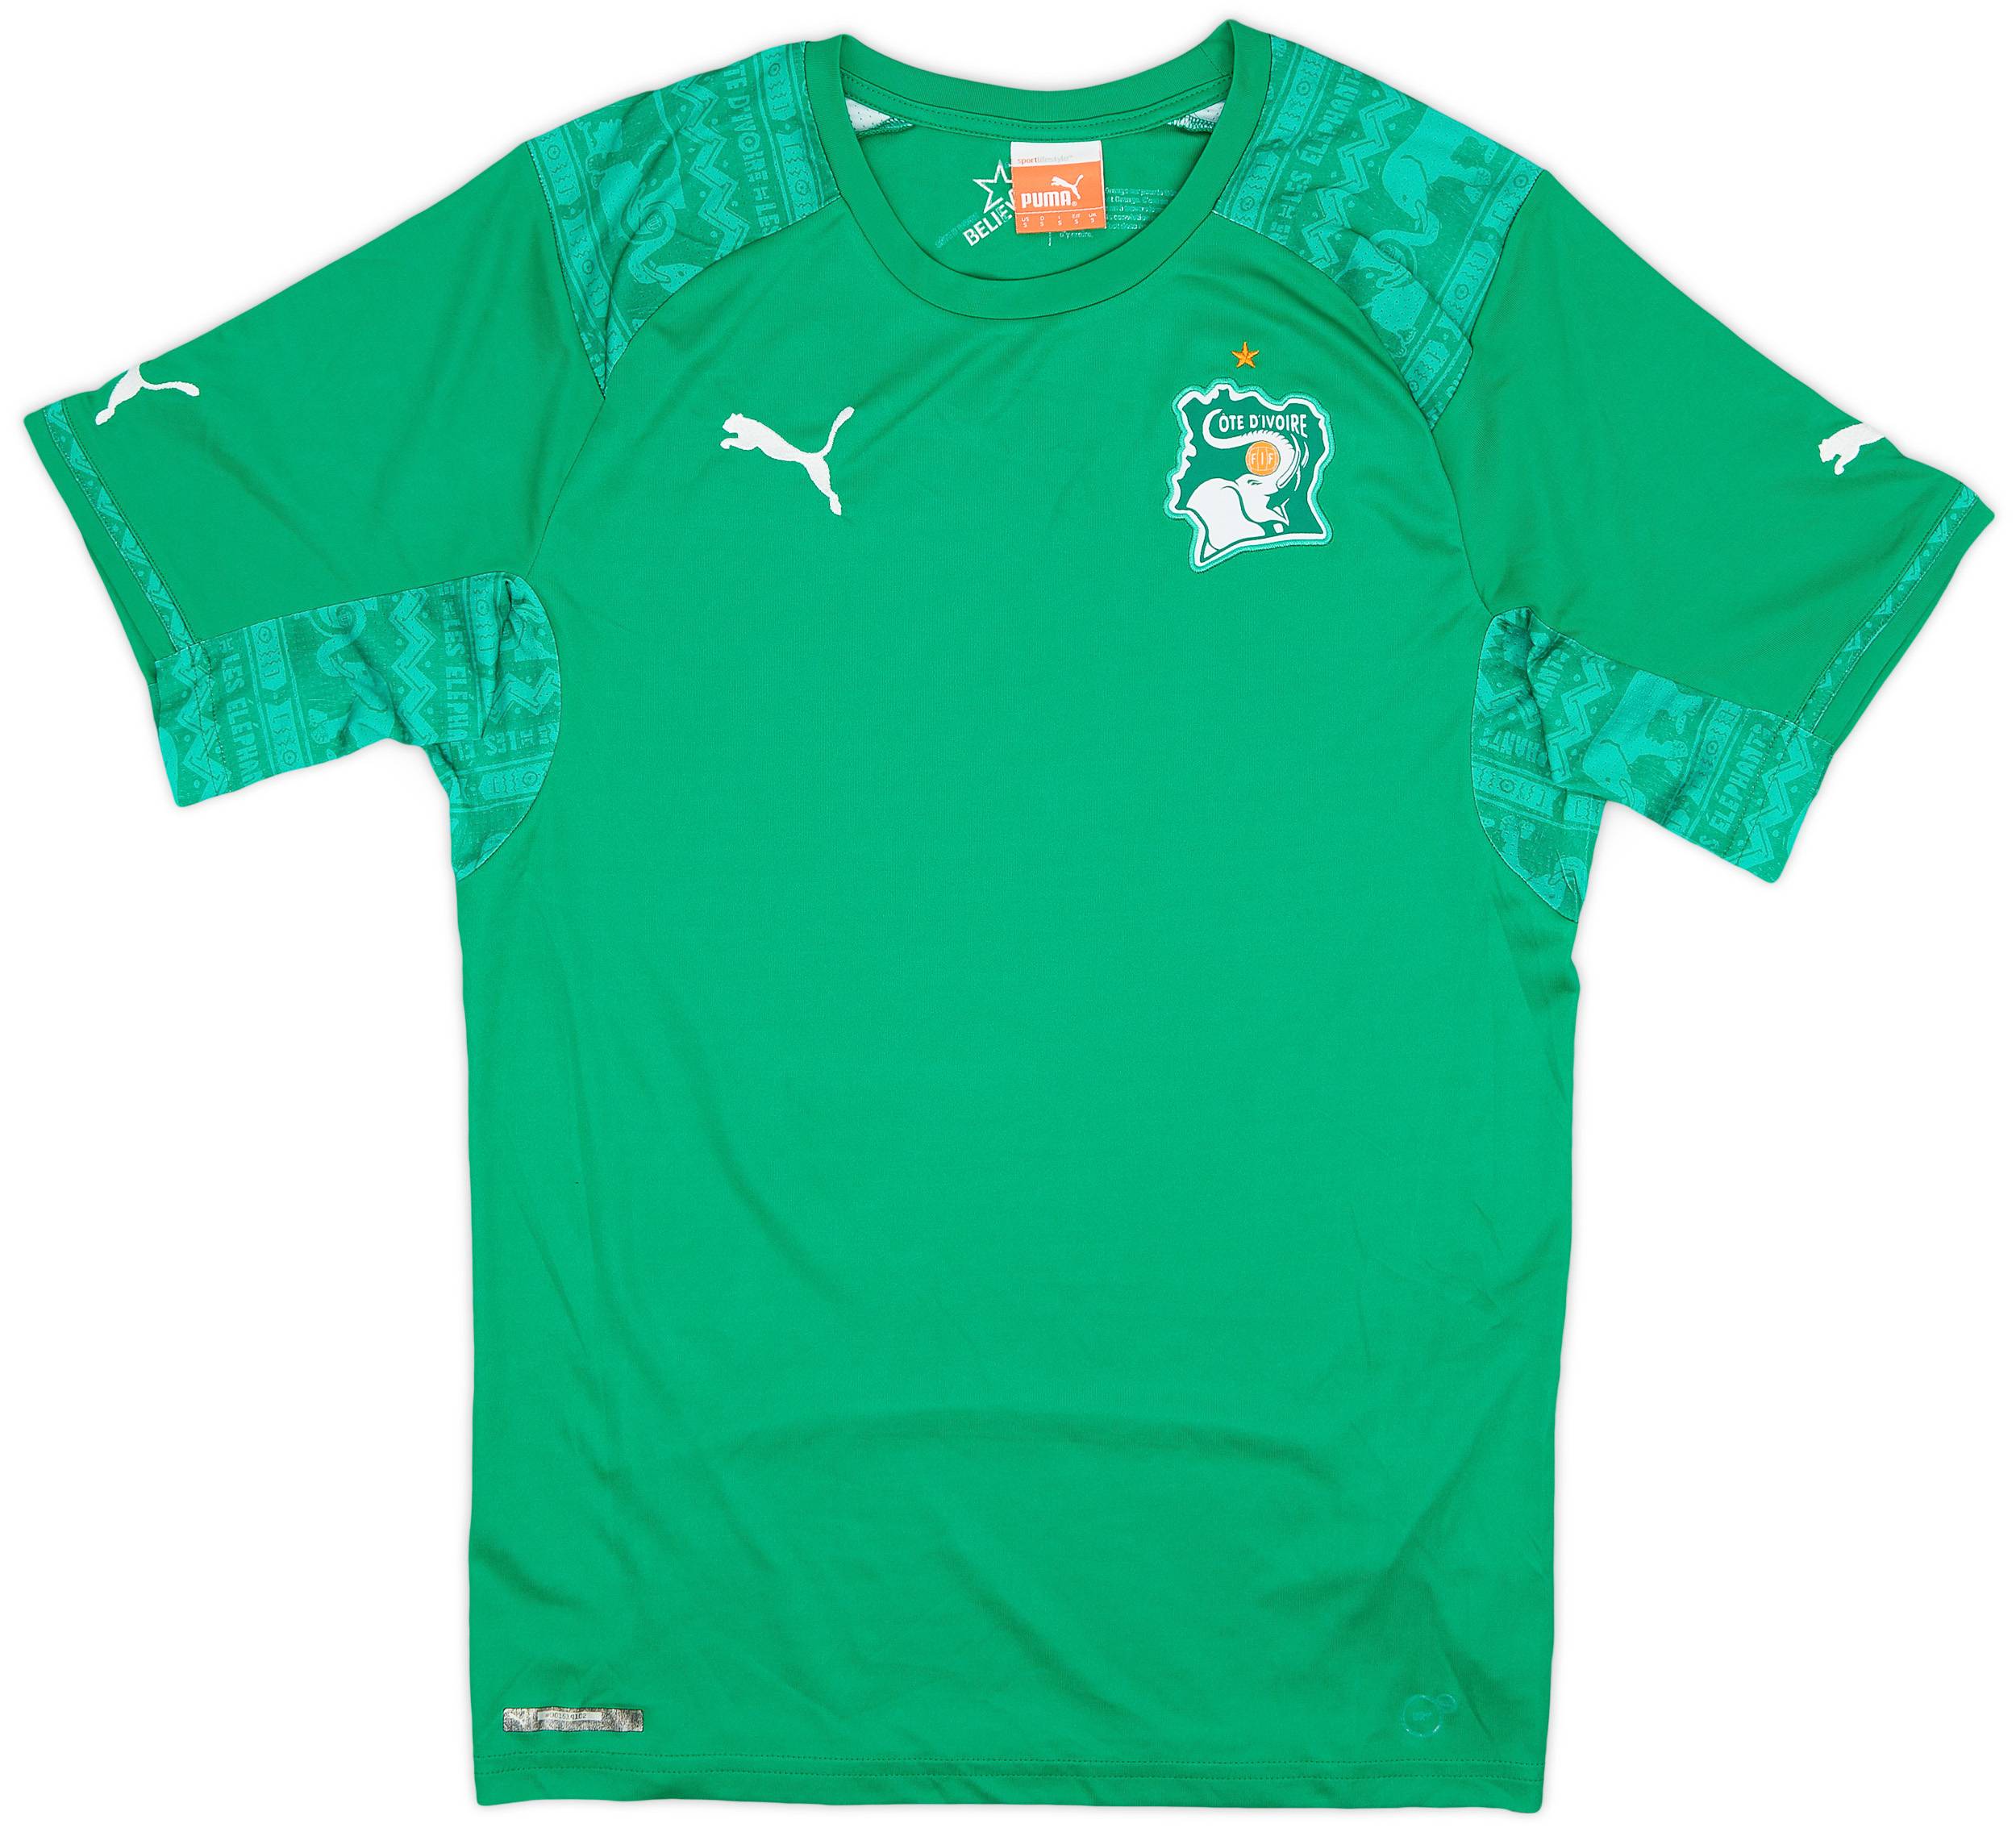 2014-16 Ivory Coast Away Shirt - 9/10 - (S)